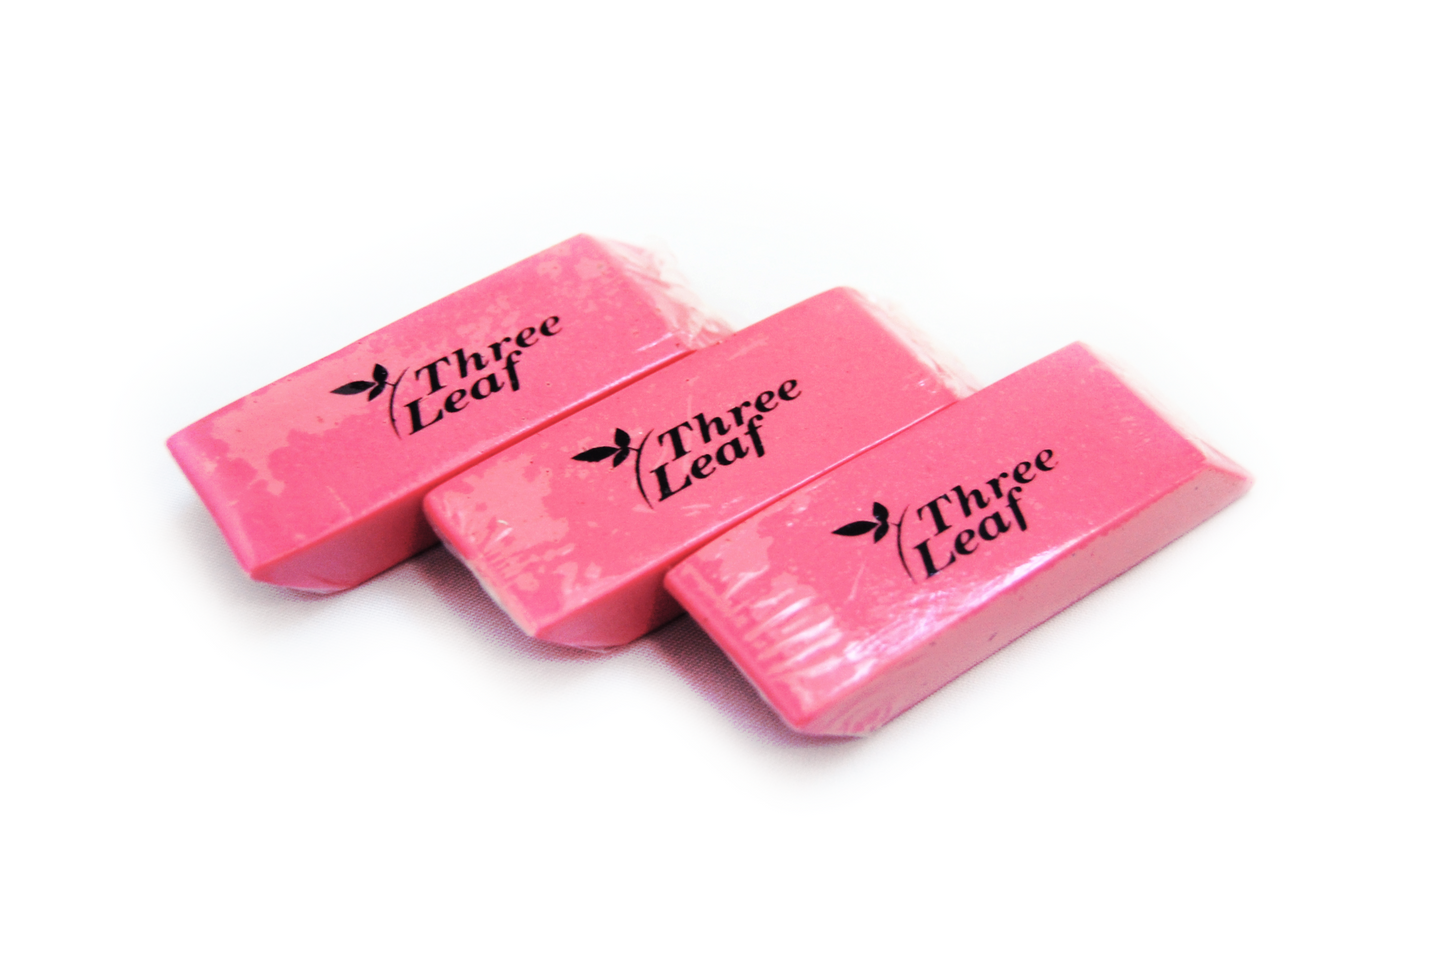 Three Leaf 48 Ct. Pink Bevel Eraser (12 Pack Per Case)